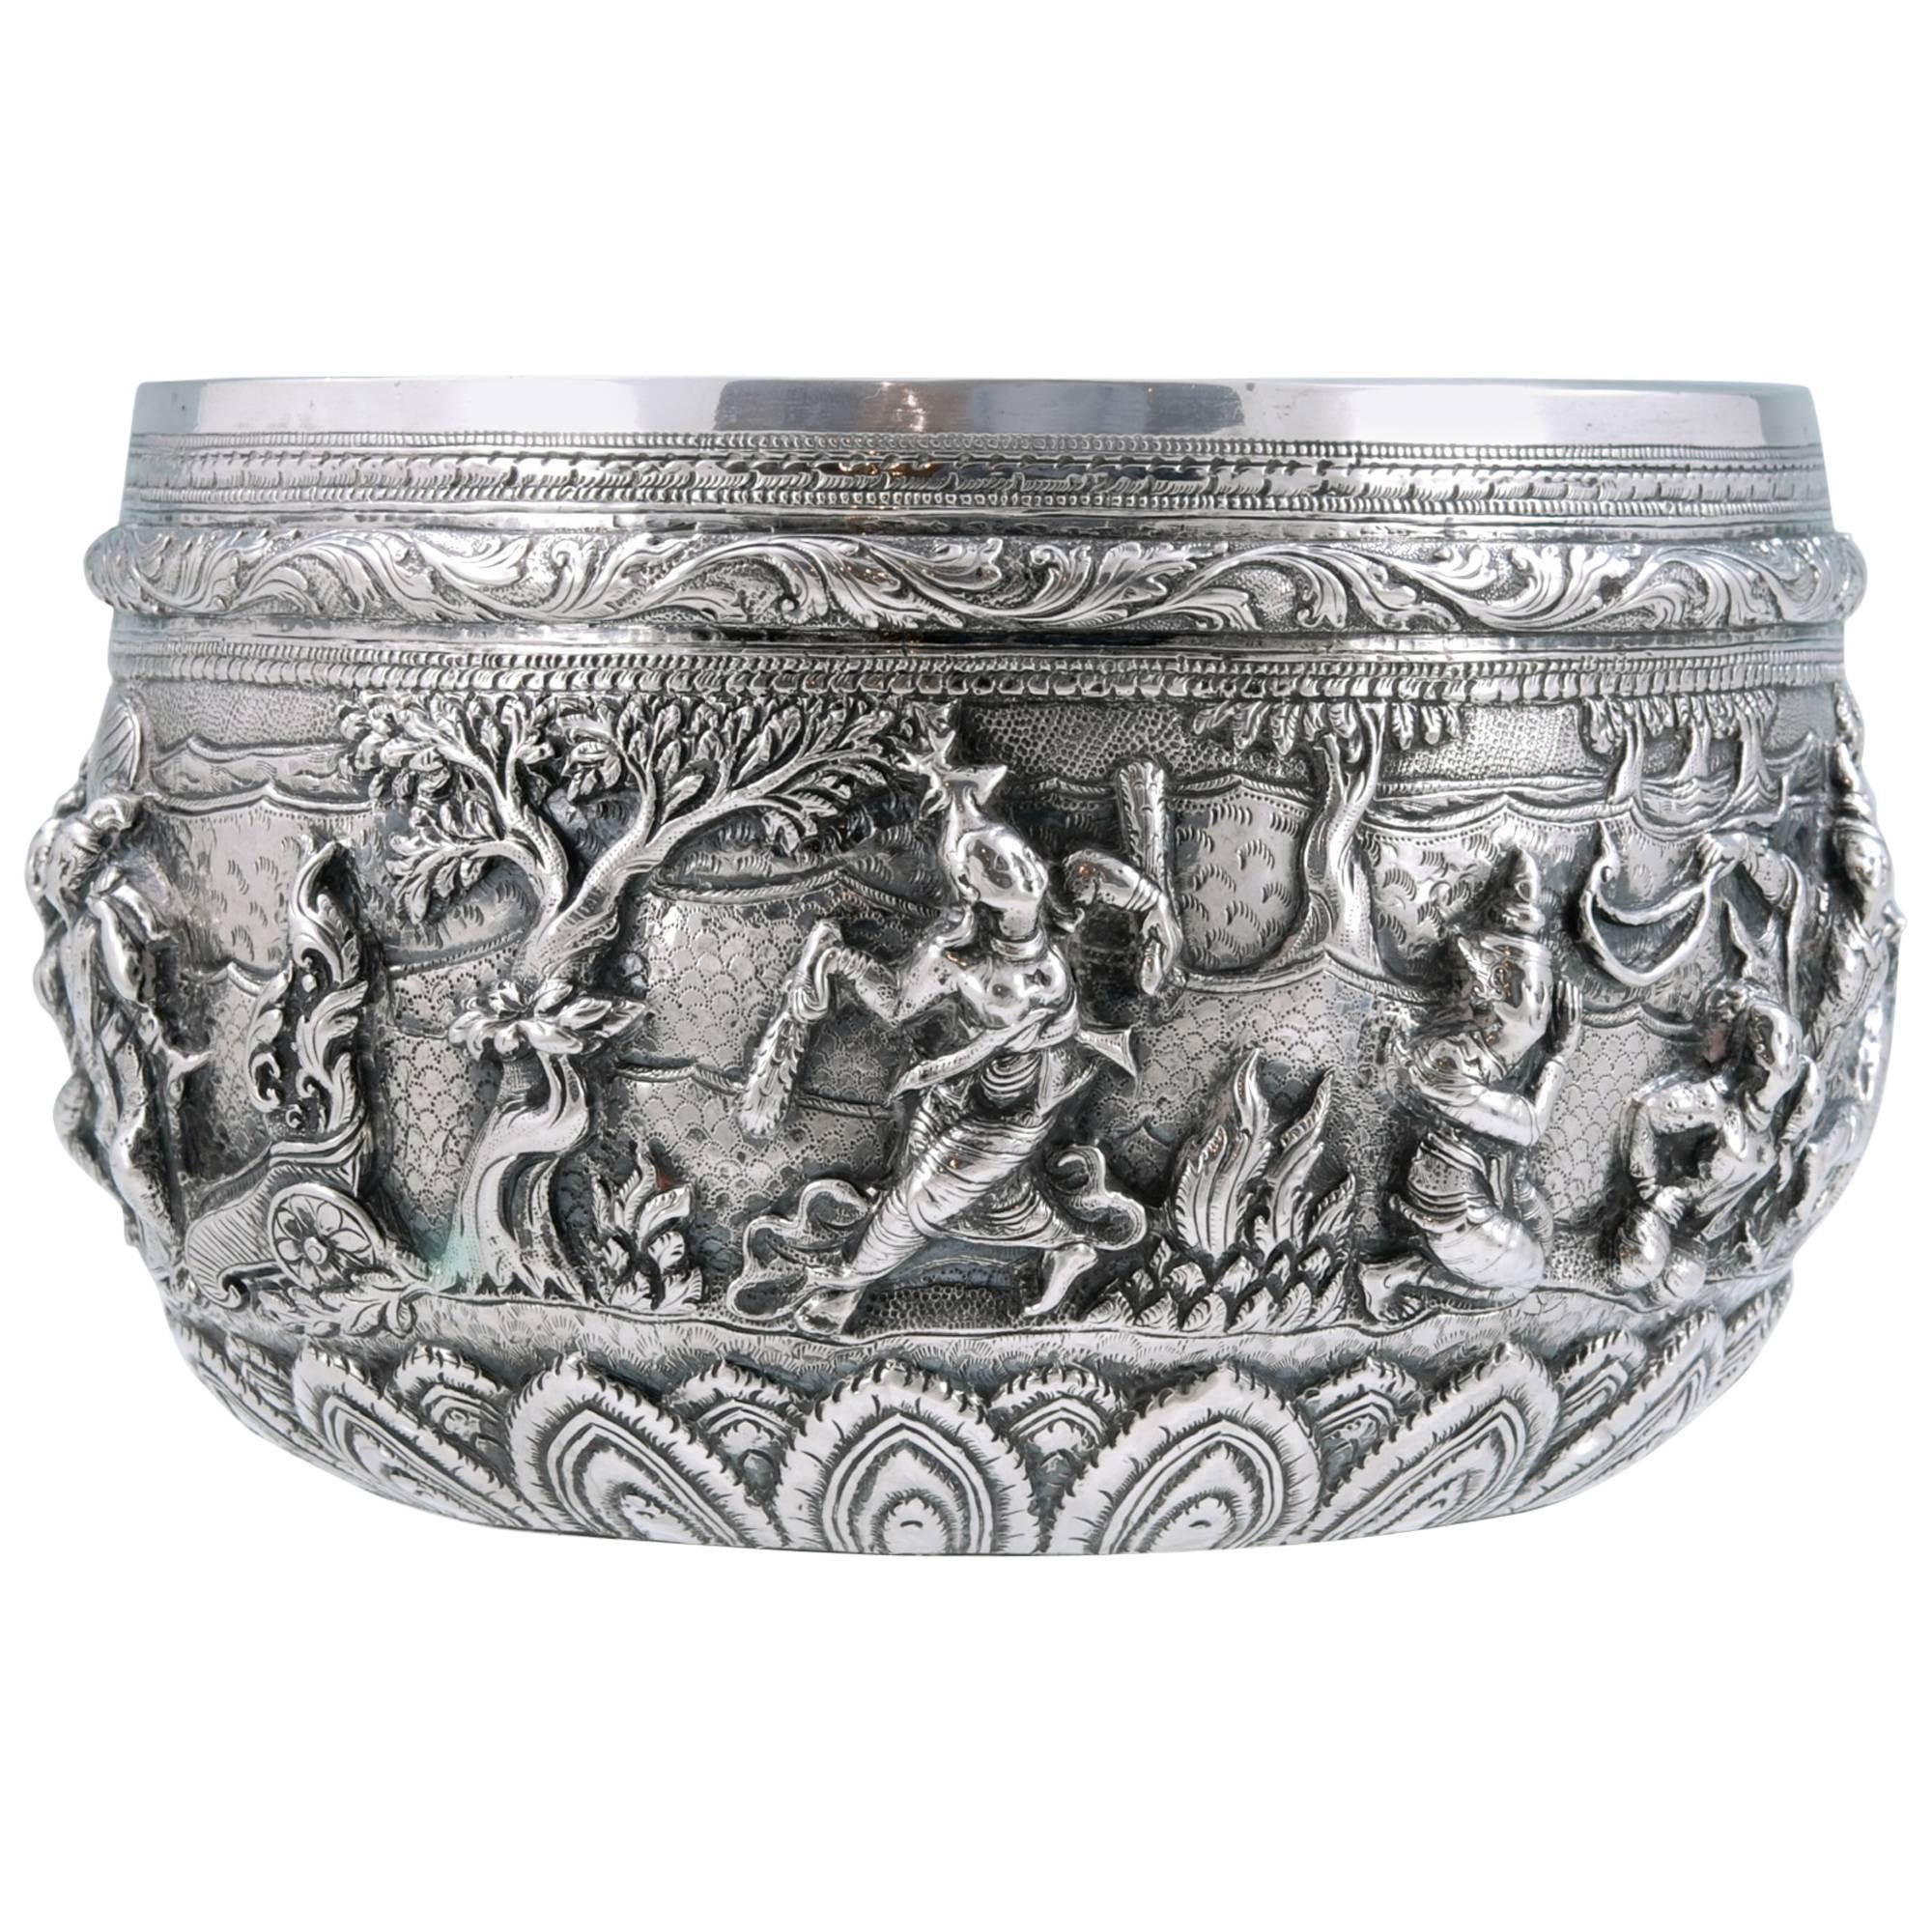 Solid Silver Burmese Bowl